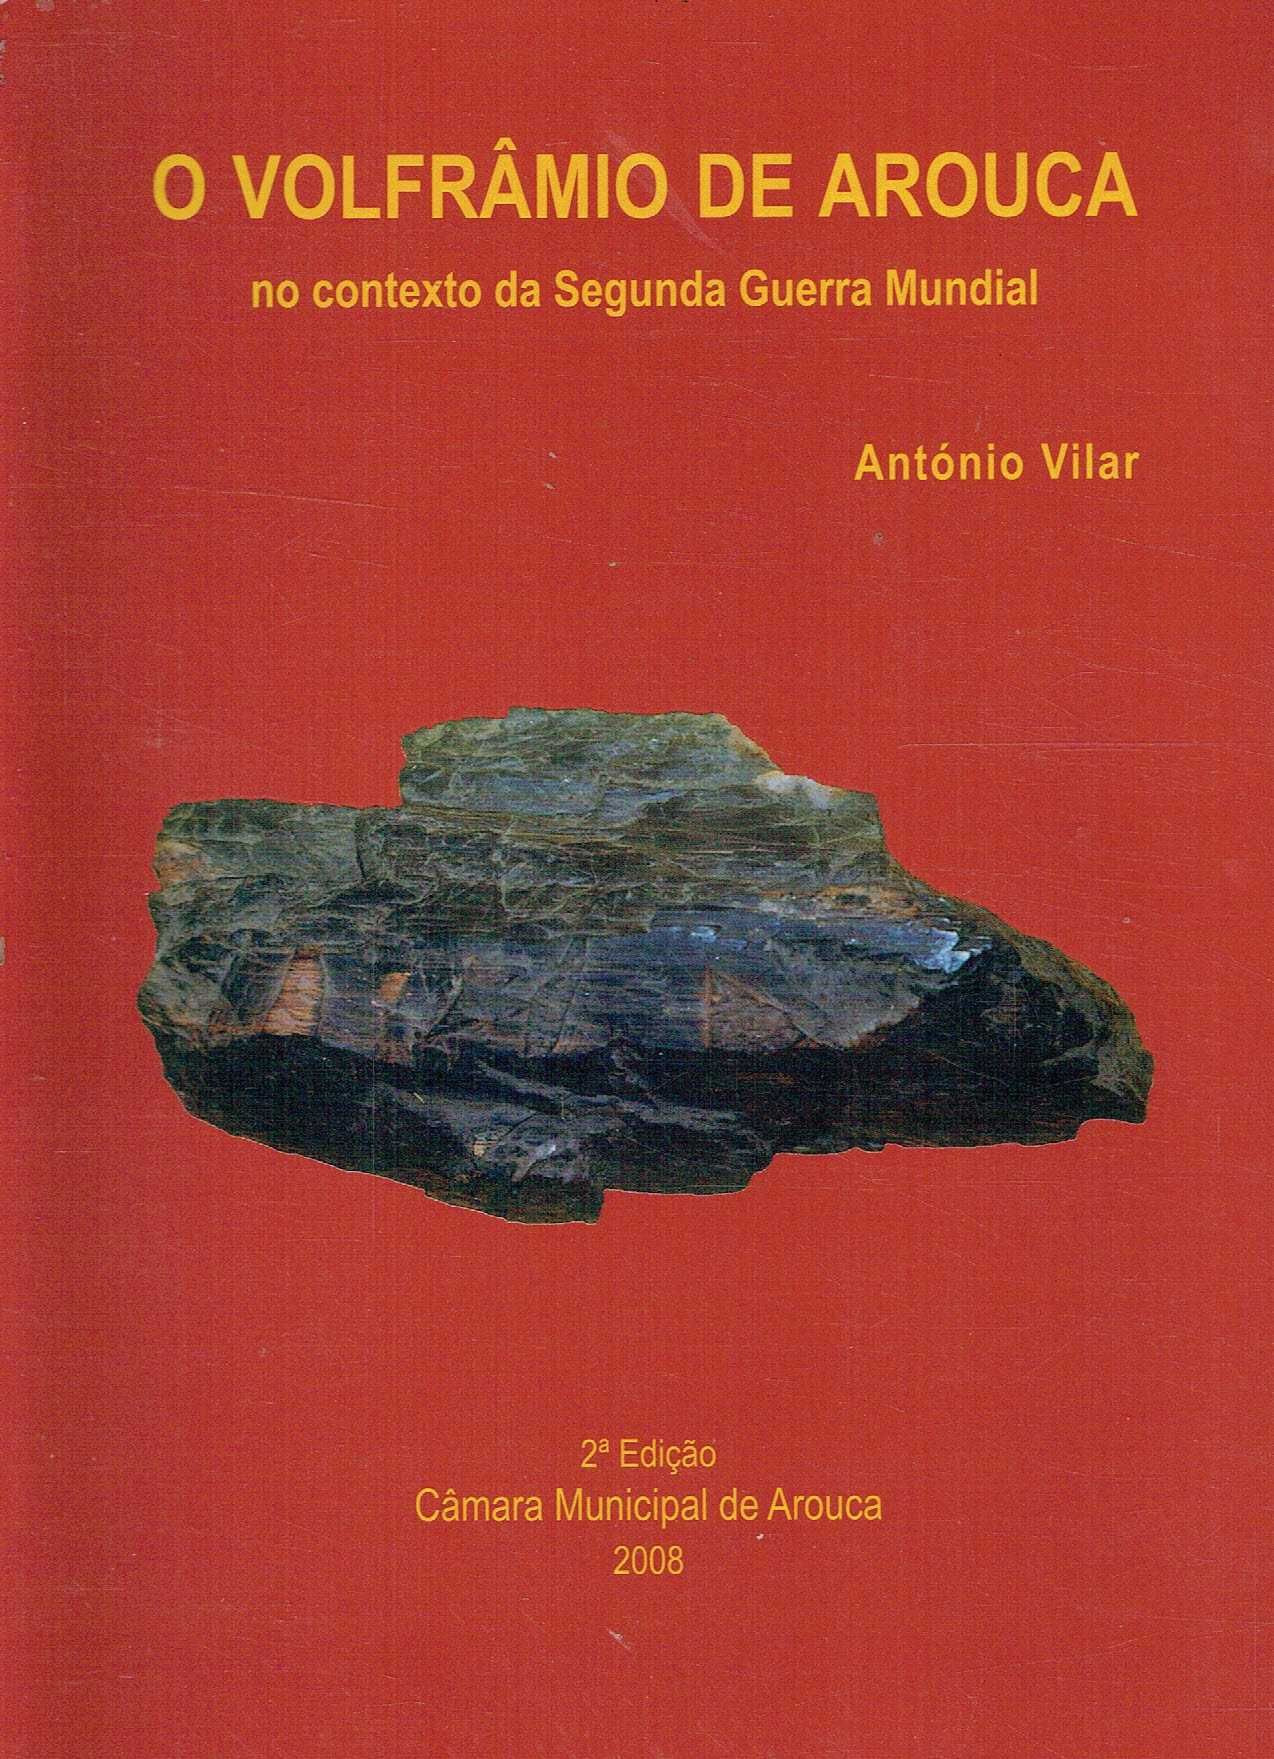 7660

O Volfrâmio de Arouca
de António Vilar